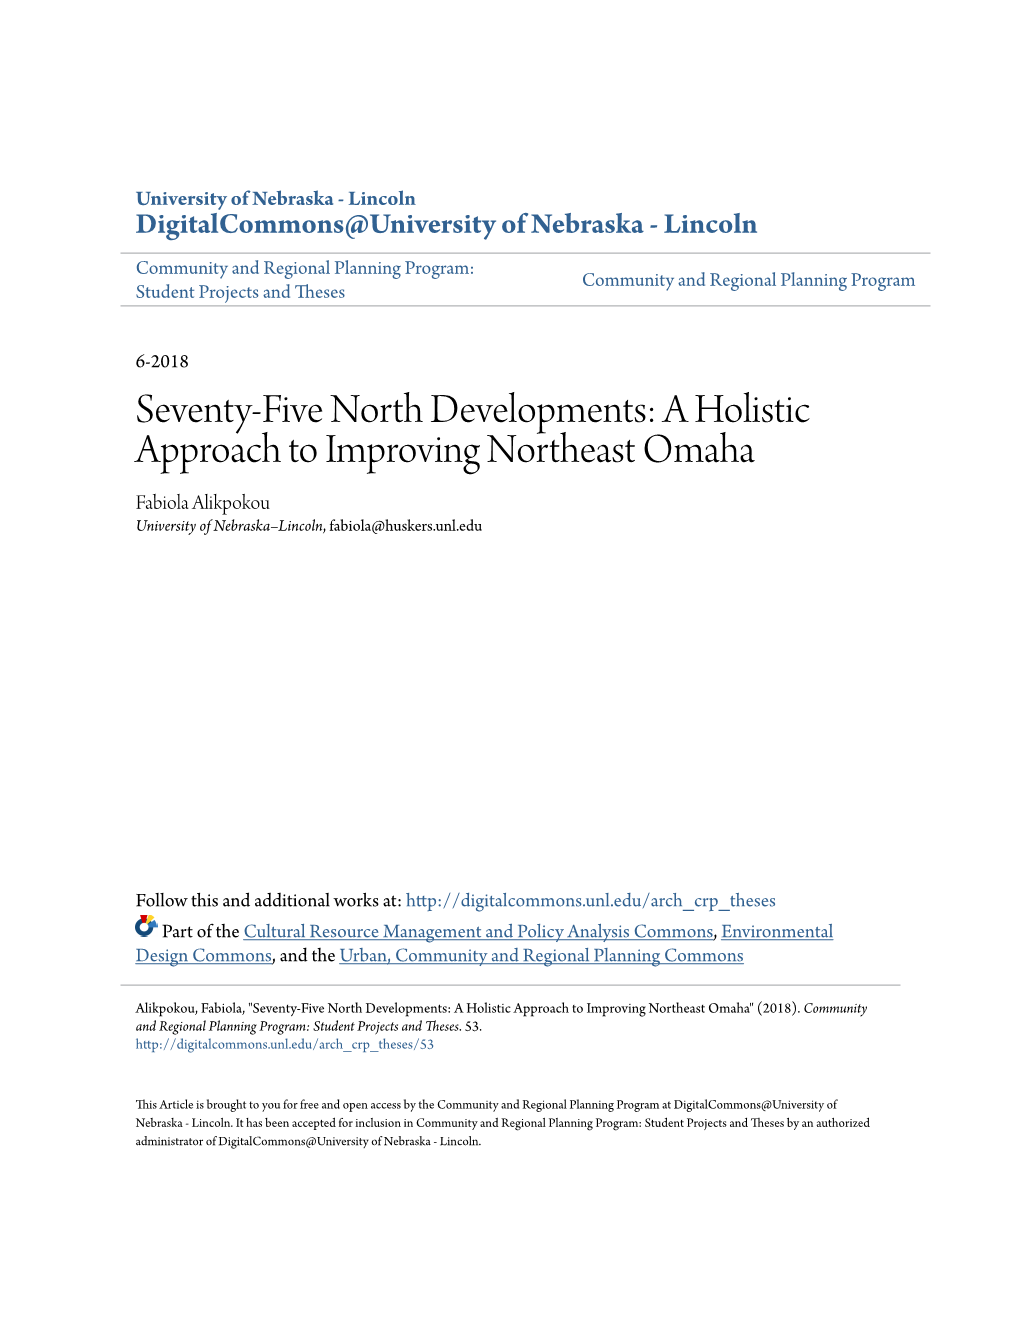 Seventy-Five North Developments: a Holistic Approach to Improving Northeast Omaha Fabiola Alikpokou University of Nebraska–Lincoln, Fabiola@Huskers.Unl.Edu